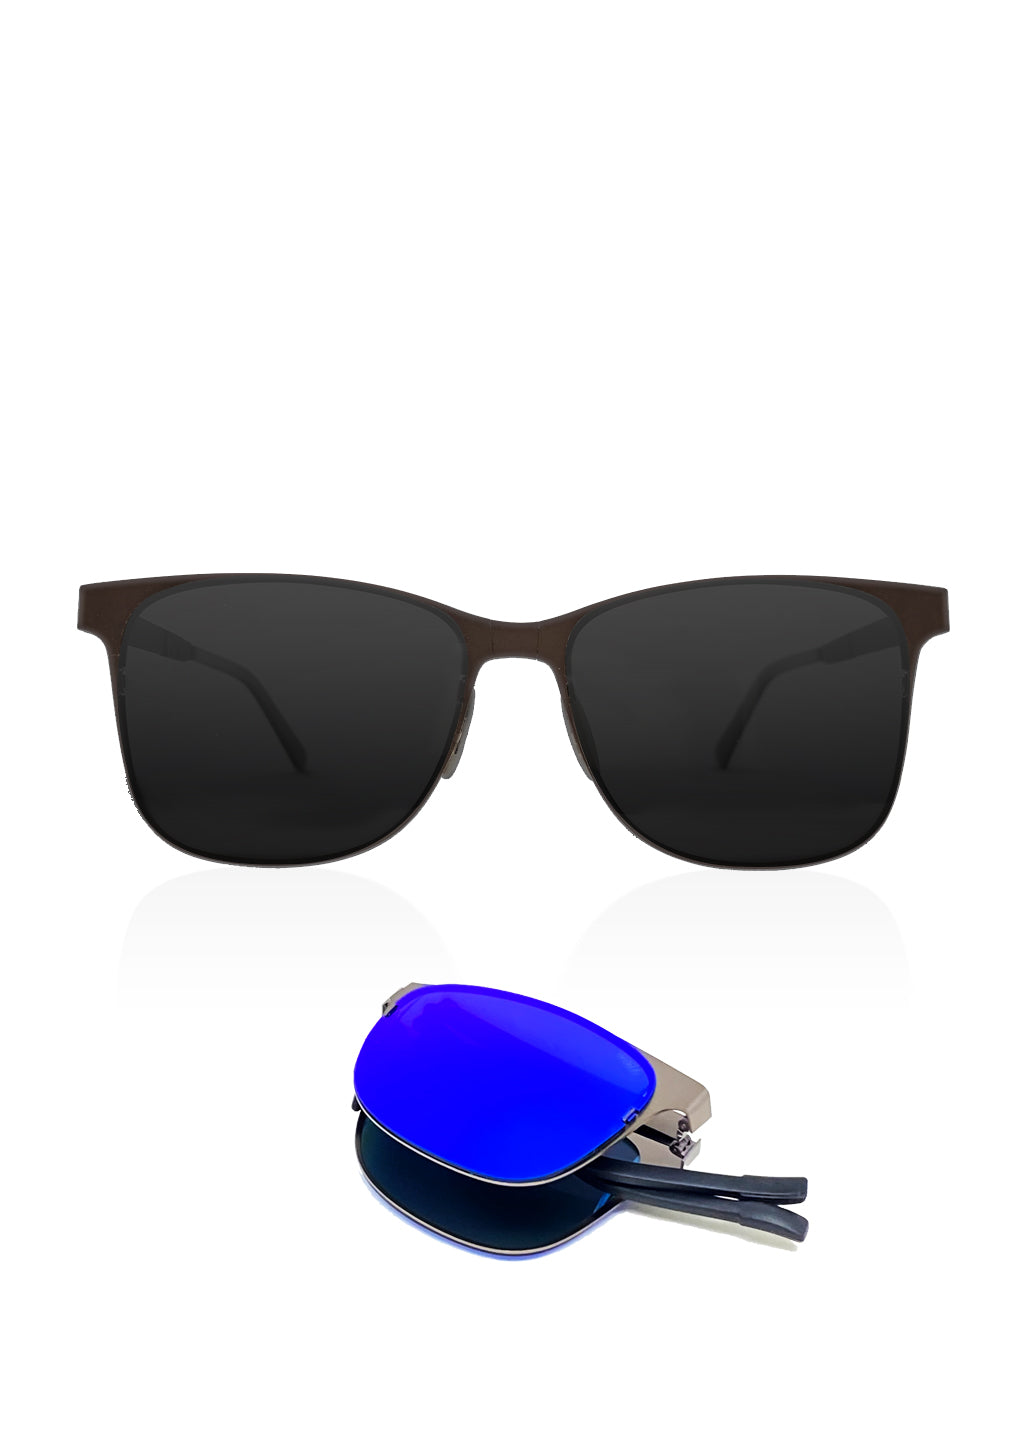 Foldable sunglasses - Rover classic wayfarer design - Front photo